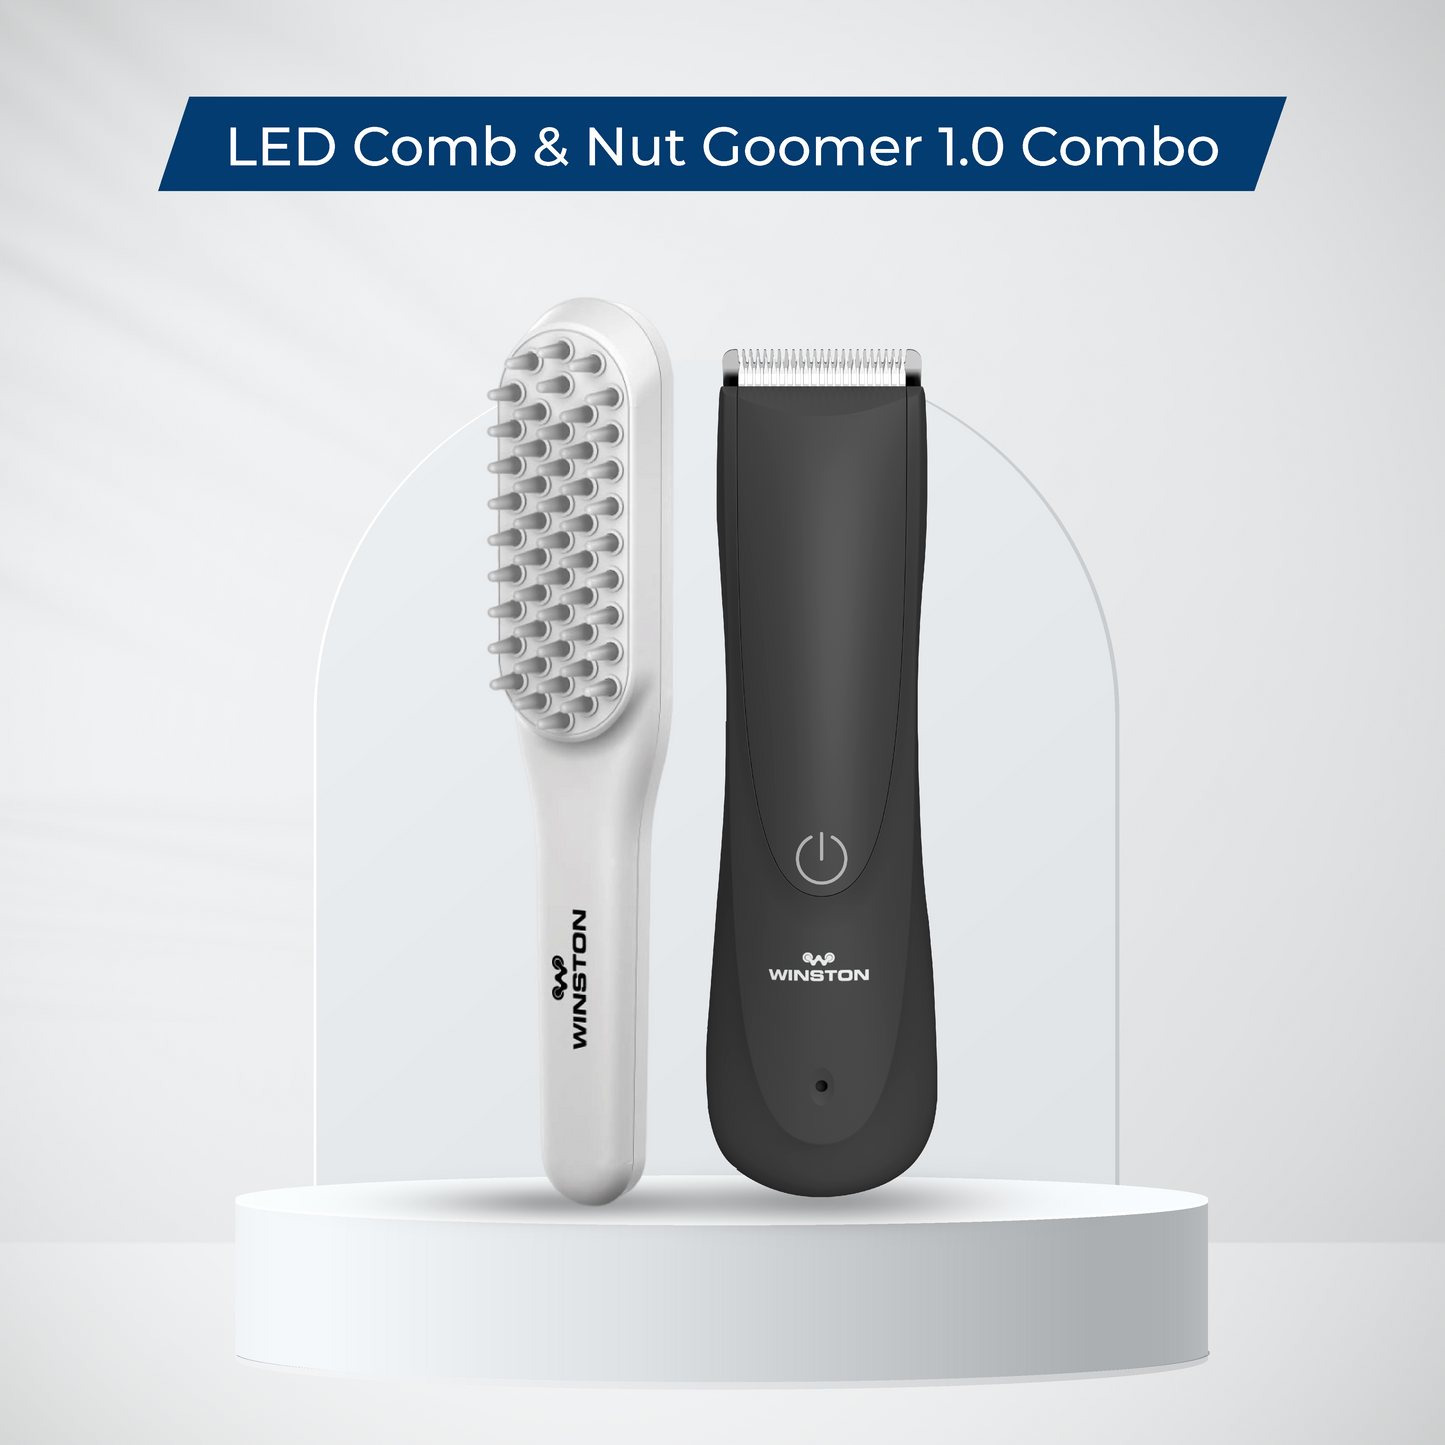 LED Comb & Nut Goomer 1.0 Combo